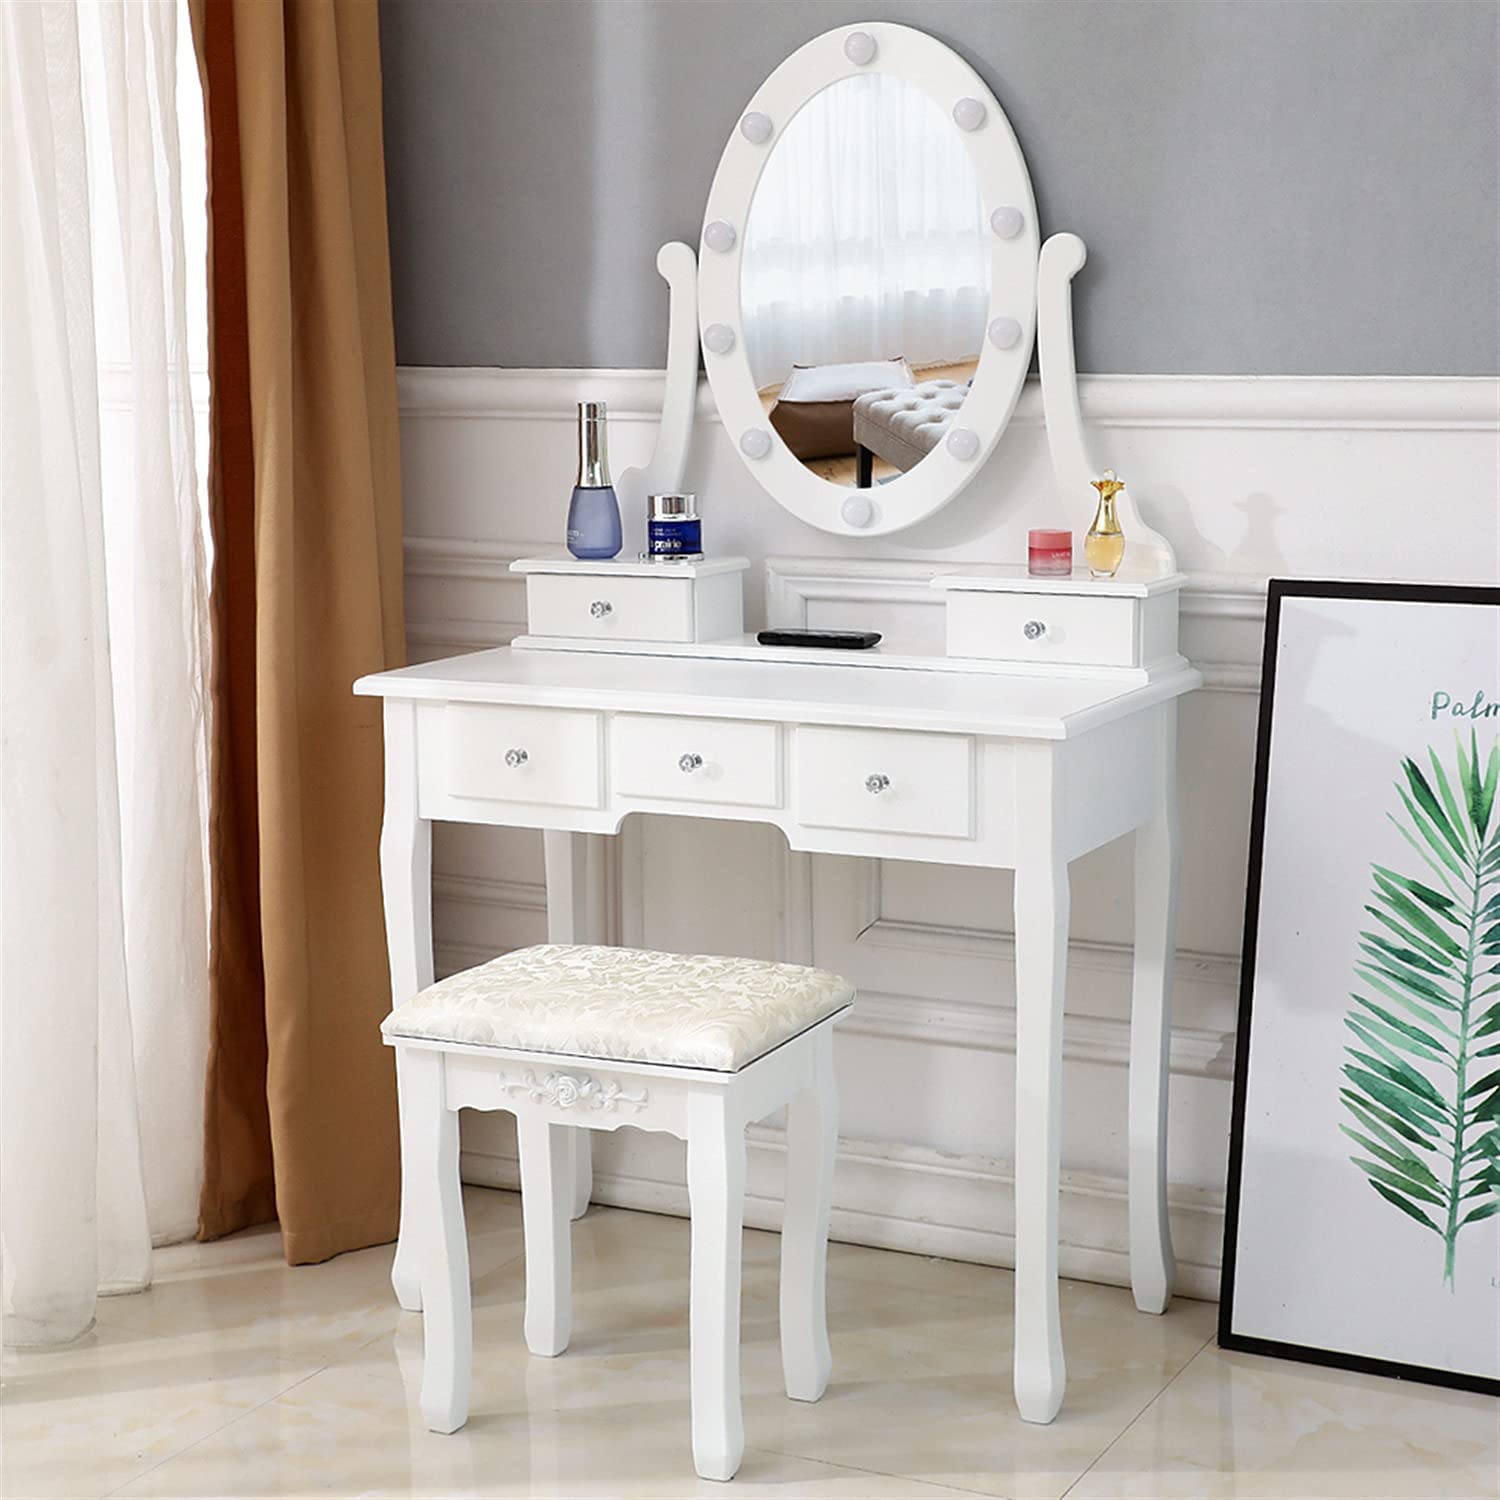 Ktaxon Vanity Table 10 LED Lights, 5 Drawers Makeup Dressing Desk with Cushioned Stool Set,Bedroom Vanities Set White - image 3 of 13